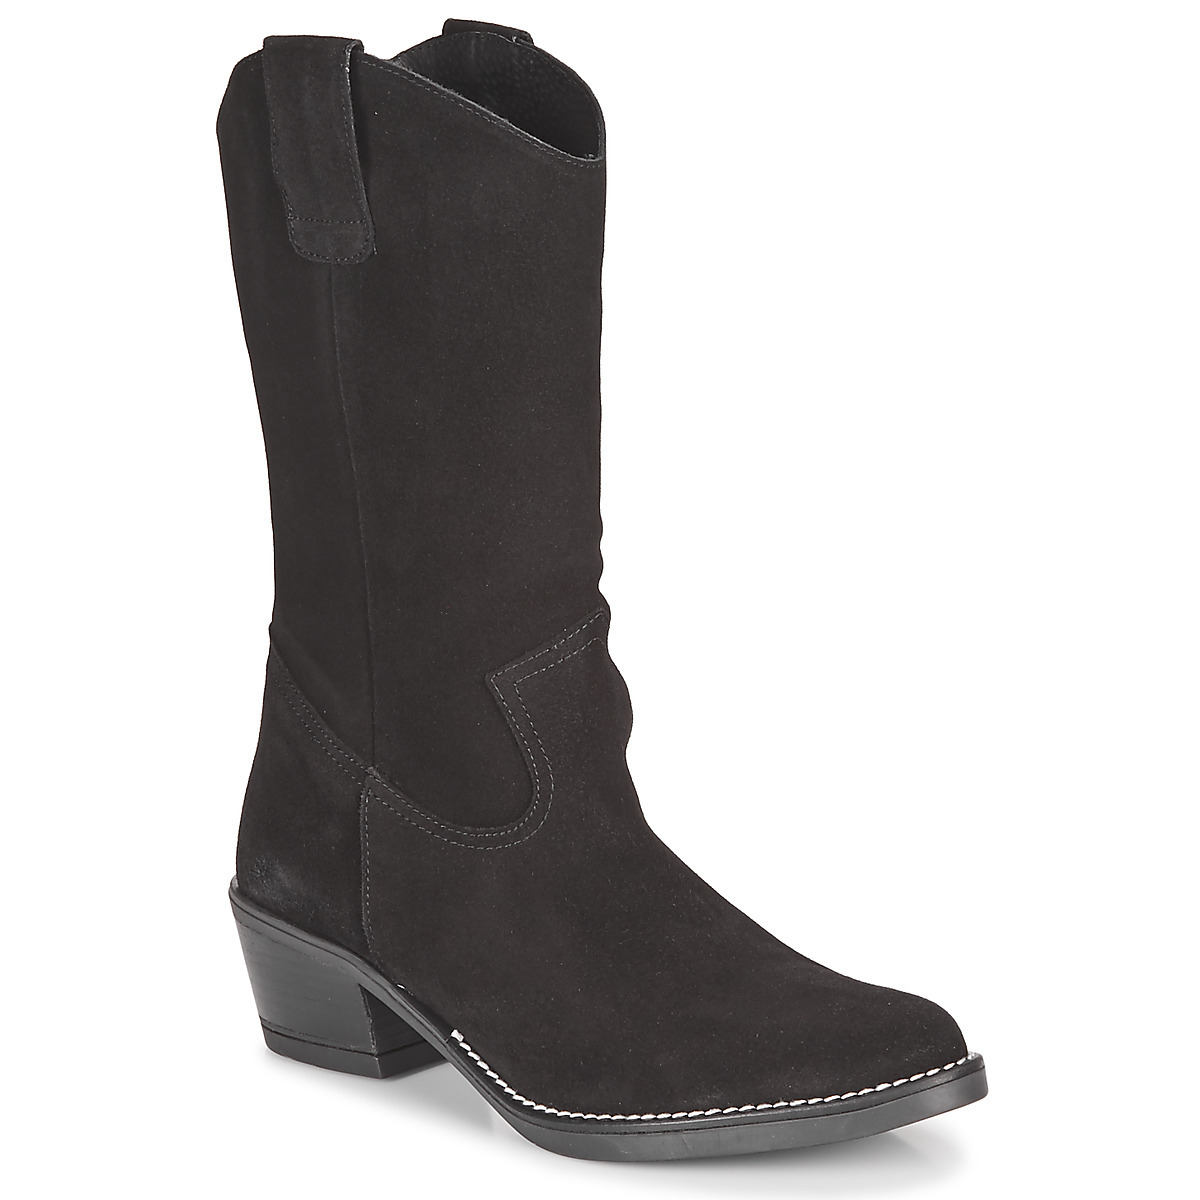 Casualtitude - Womens Boots in Black - Spartoo GOOFASH